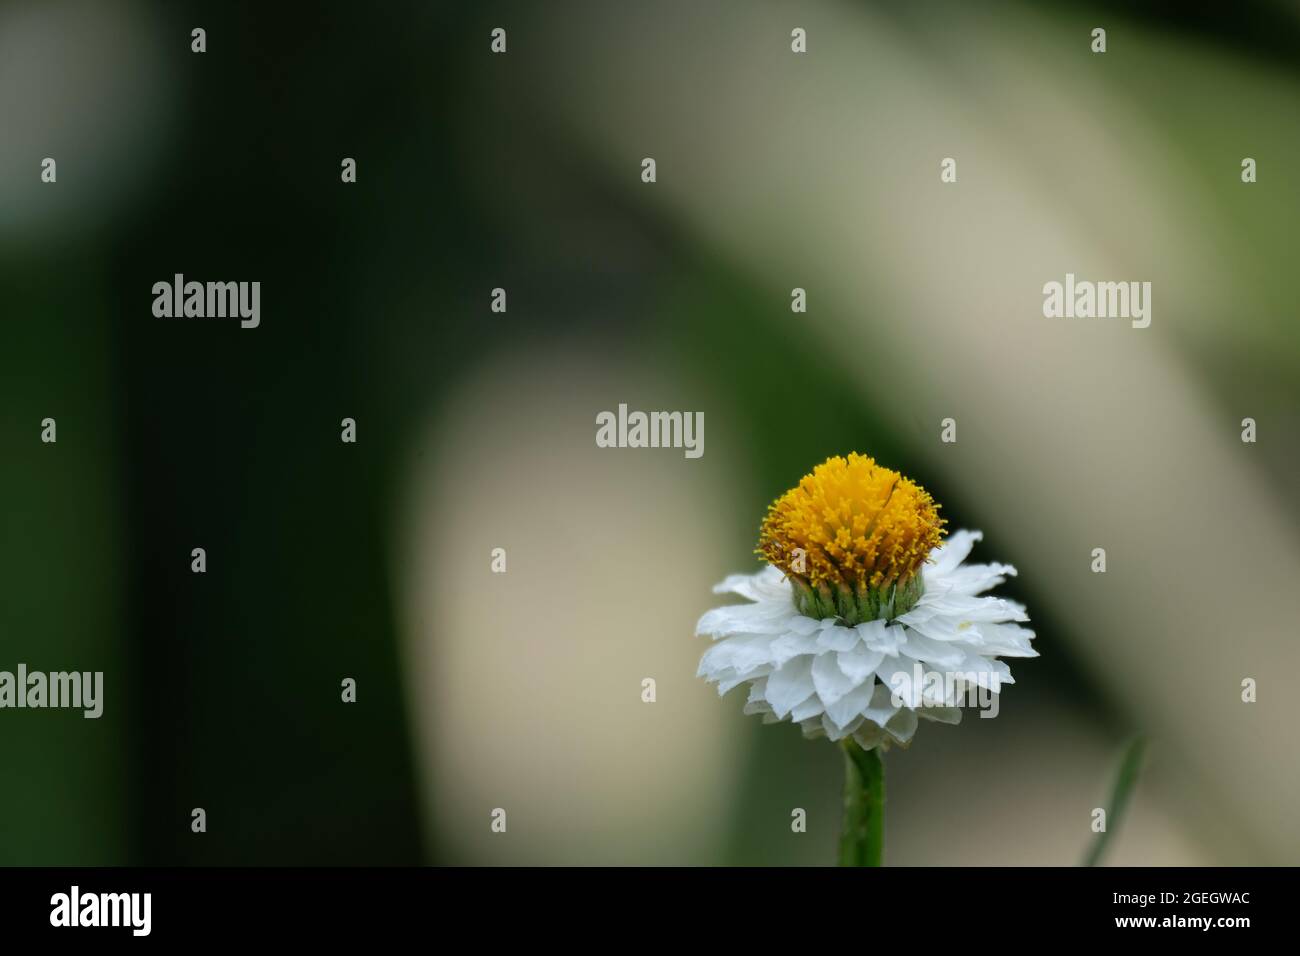 Close-up of single daisy flower against dark background Stock Photo